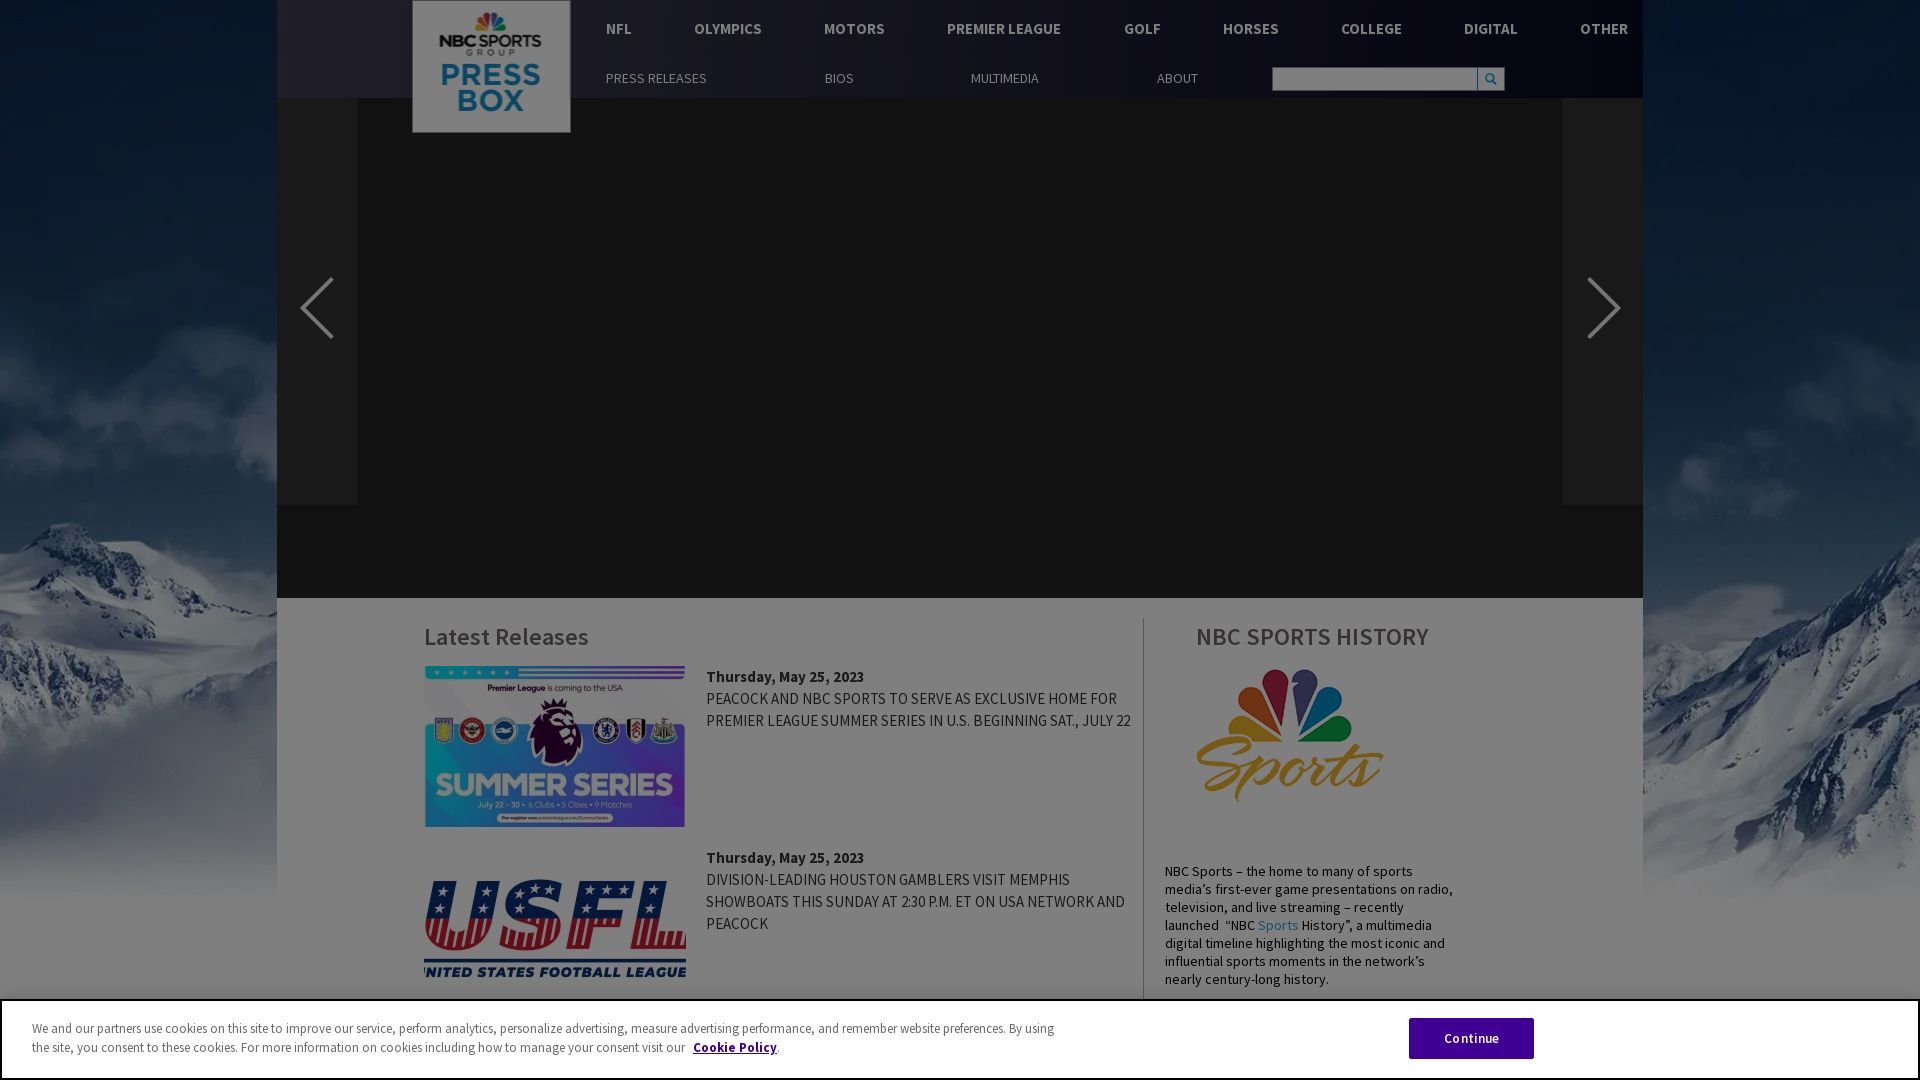 Website status nbcsportsgrouppressbox.com is   ONLINE